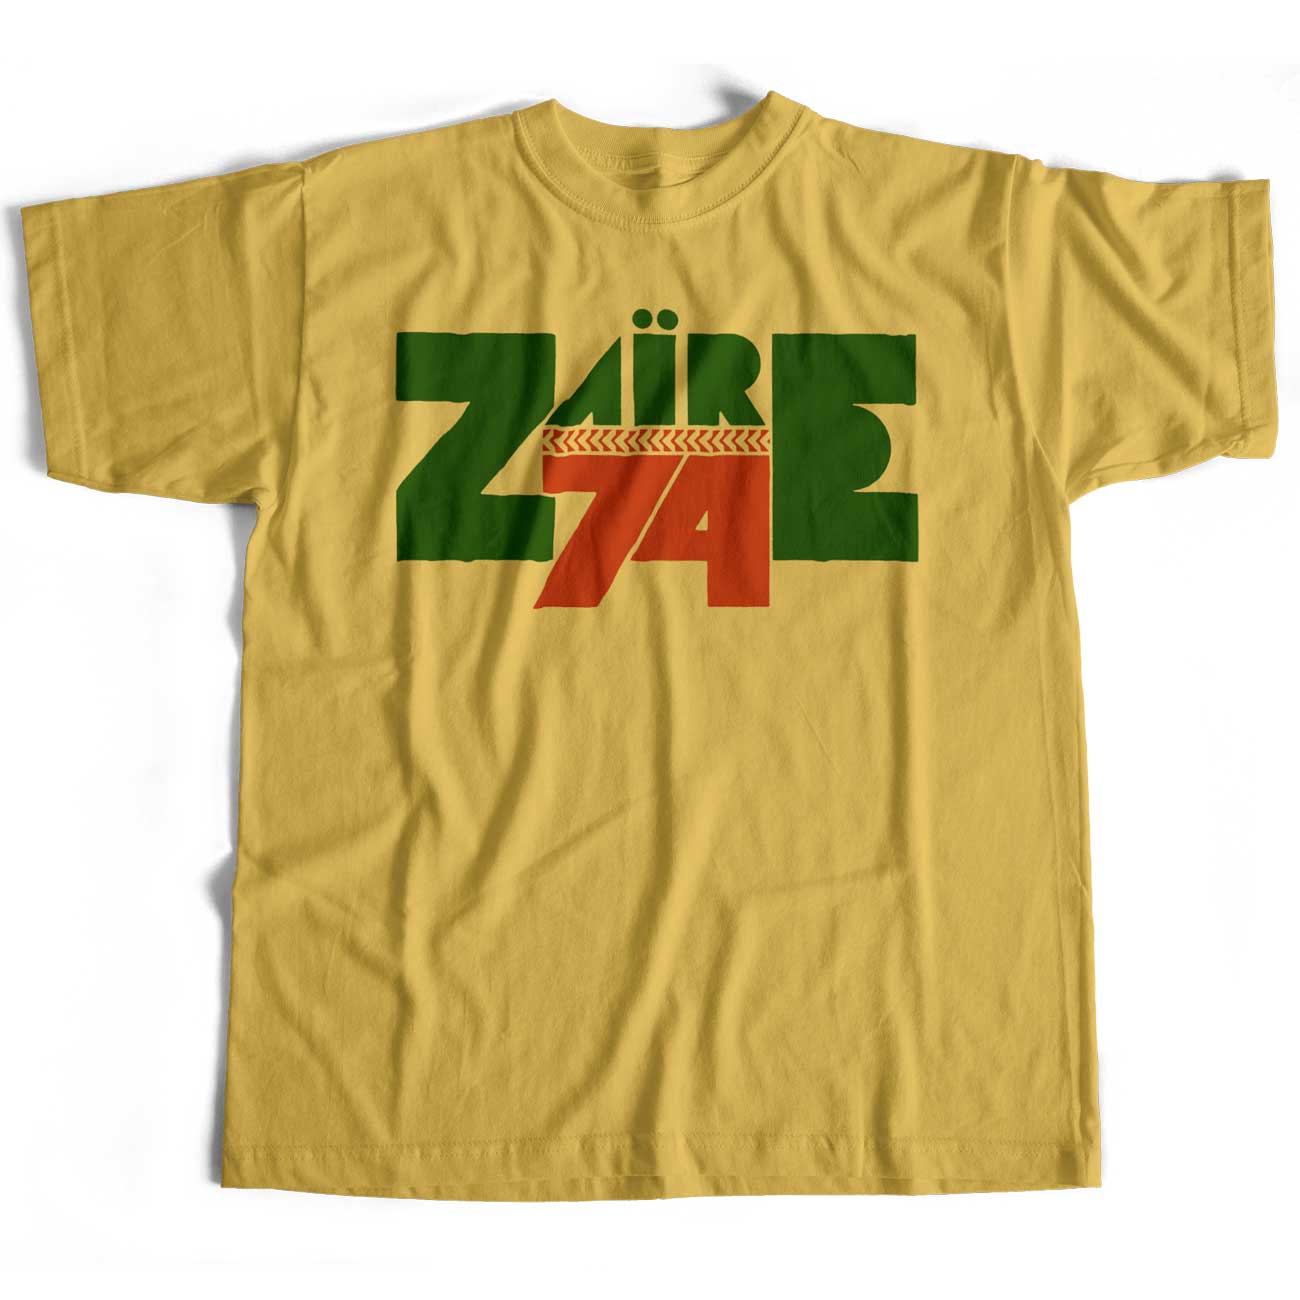 Zaire 74 T Shirt - Classic Boxing / Music Festival Logo Afrobeat 70's Funk